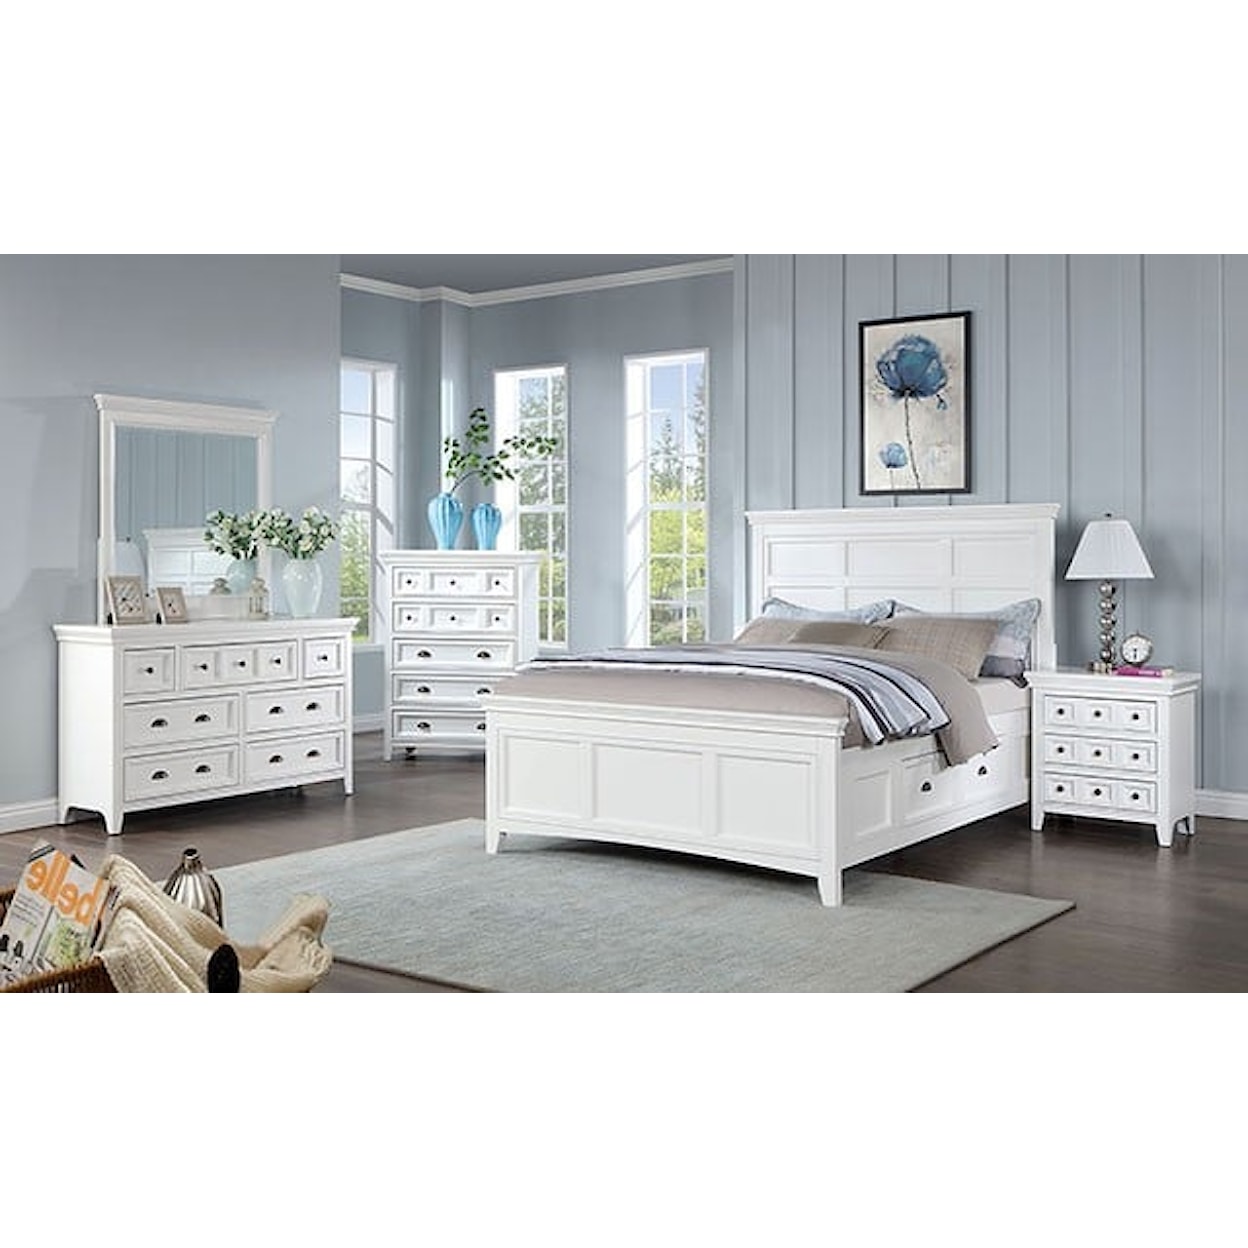 Furniture of America CASTILE 4-Piece Full Bedroom Set